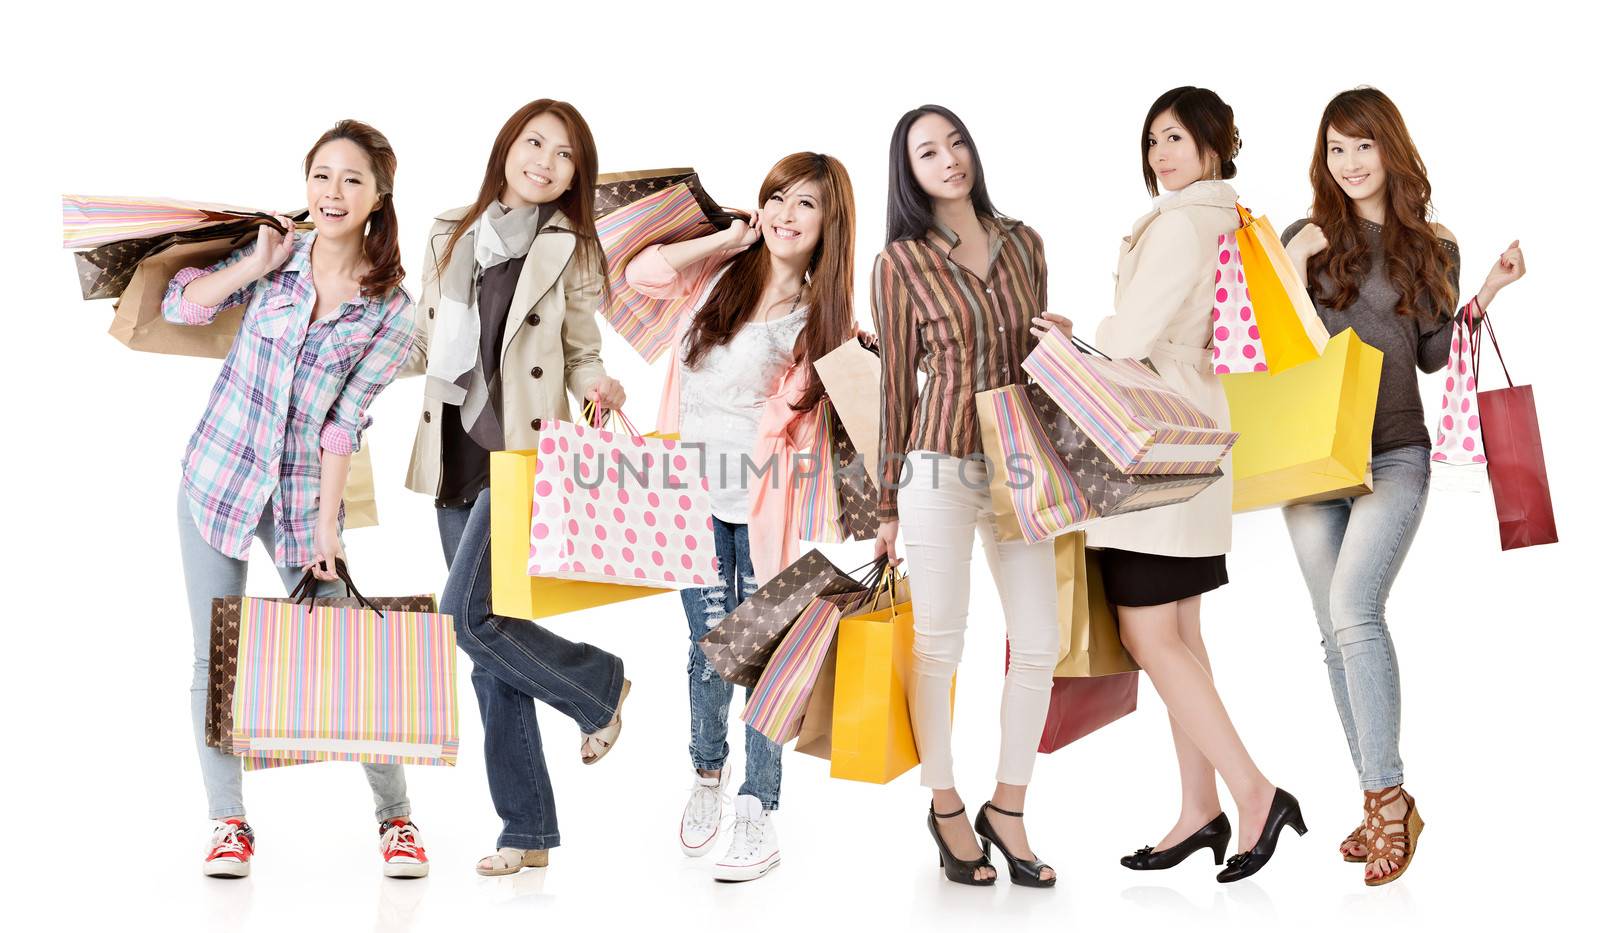 Group of Asian shopping women by elwynn